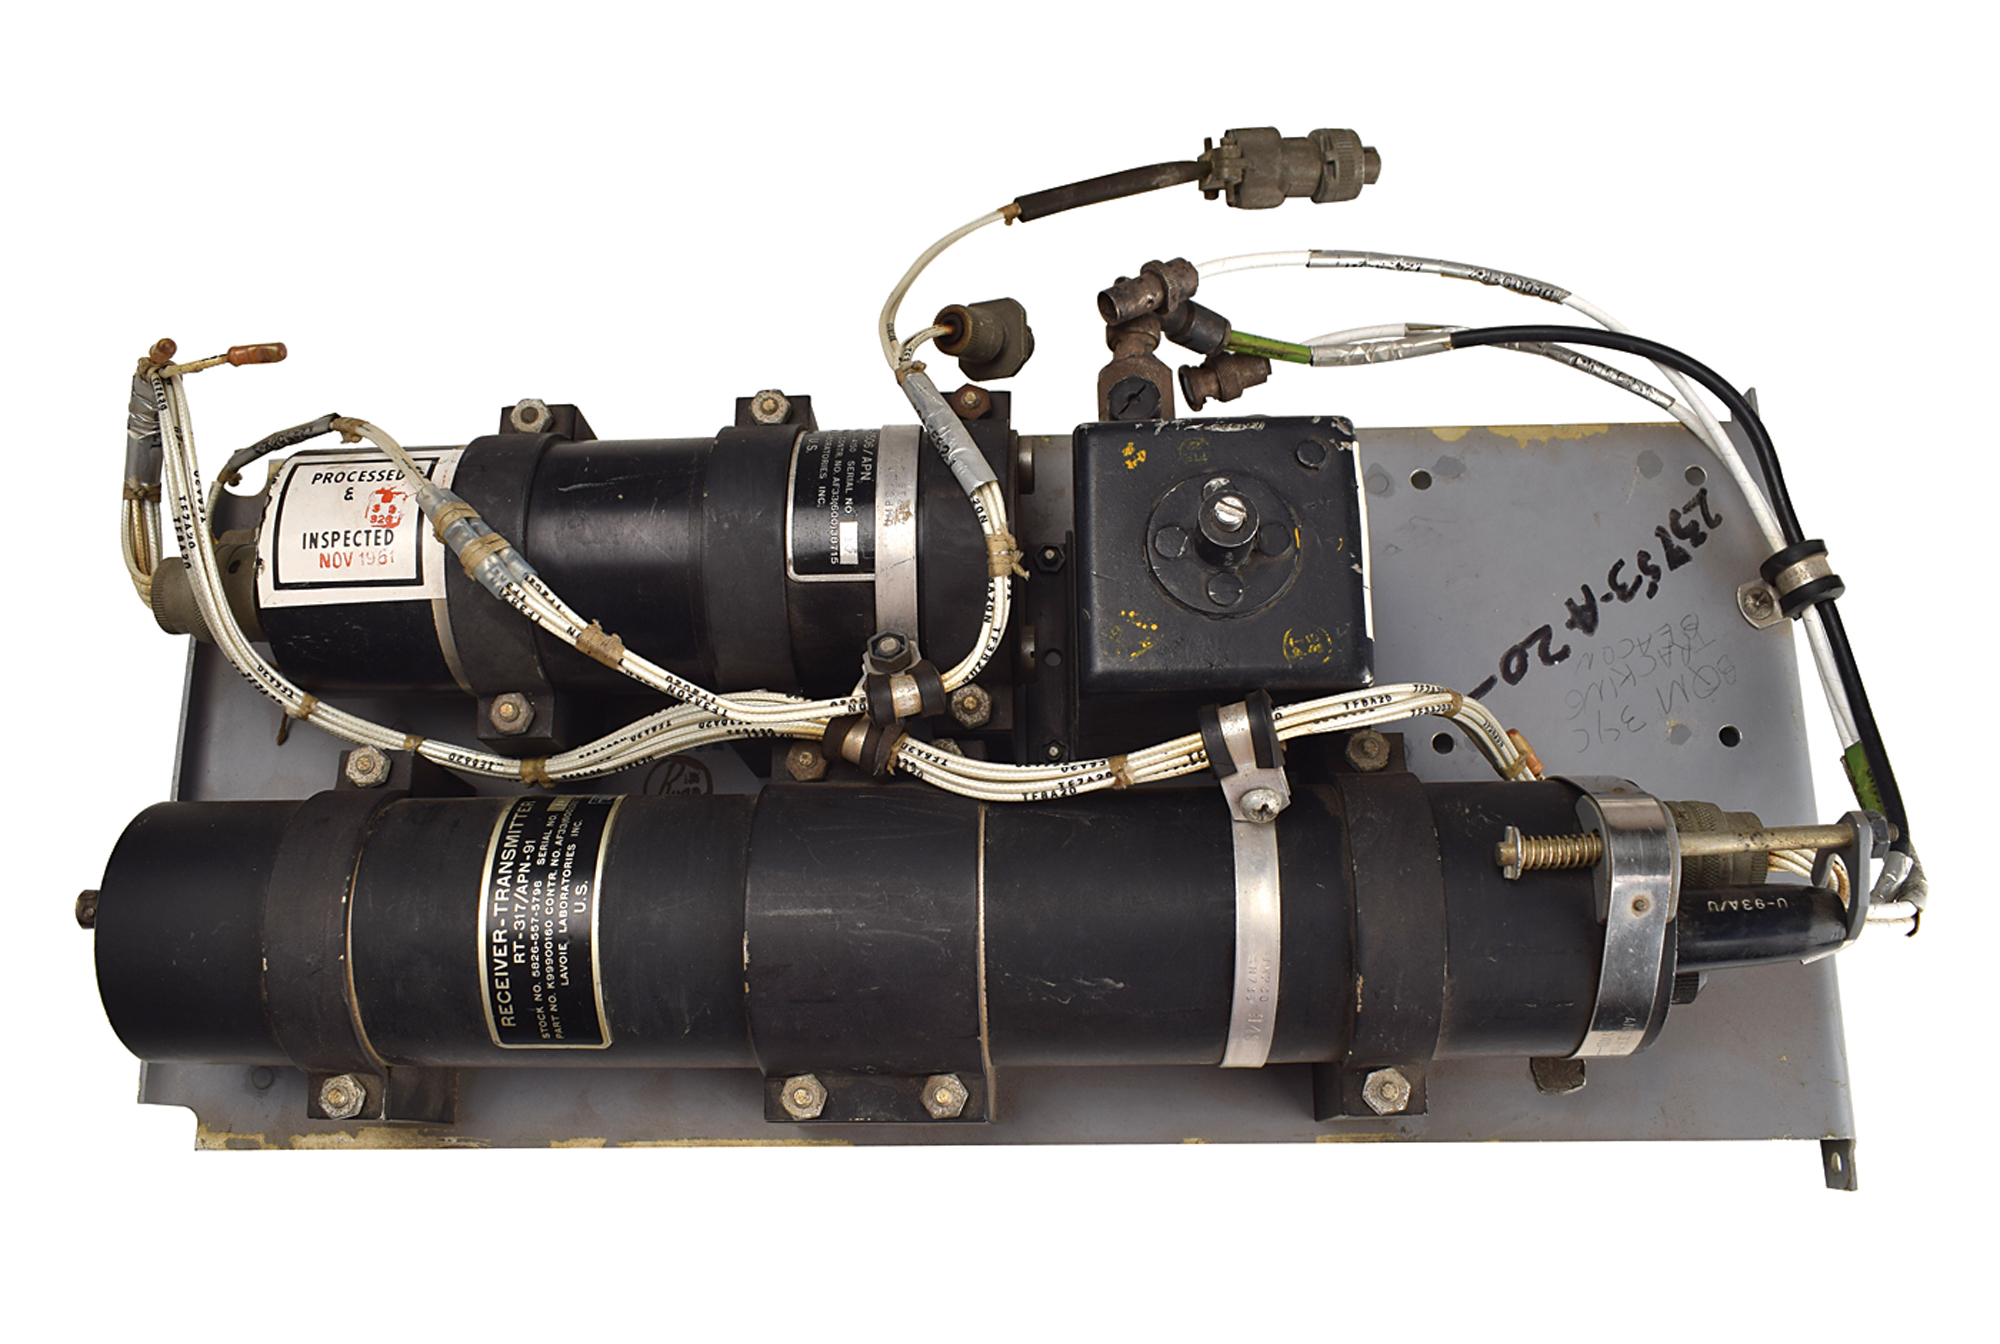 Lot #176 BQM-34 Drone Radio Receiver-Transmitter Tracking Beacon and Autonetic Verdan Disc Memory